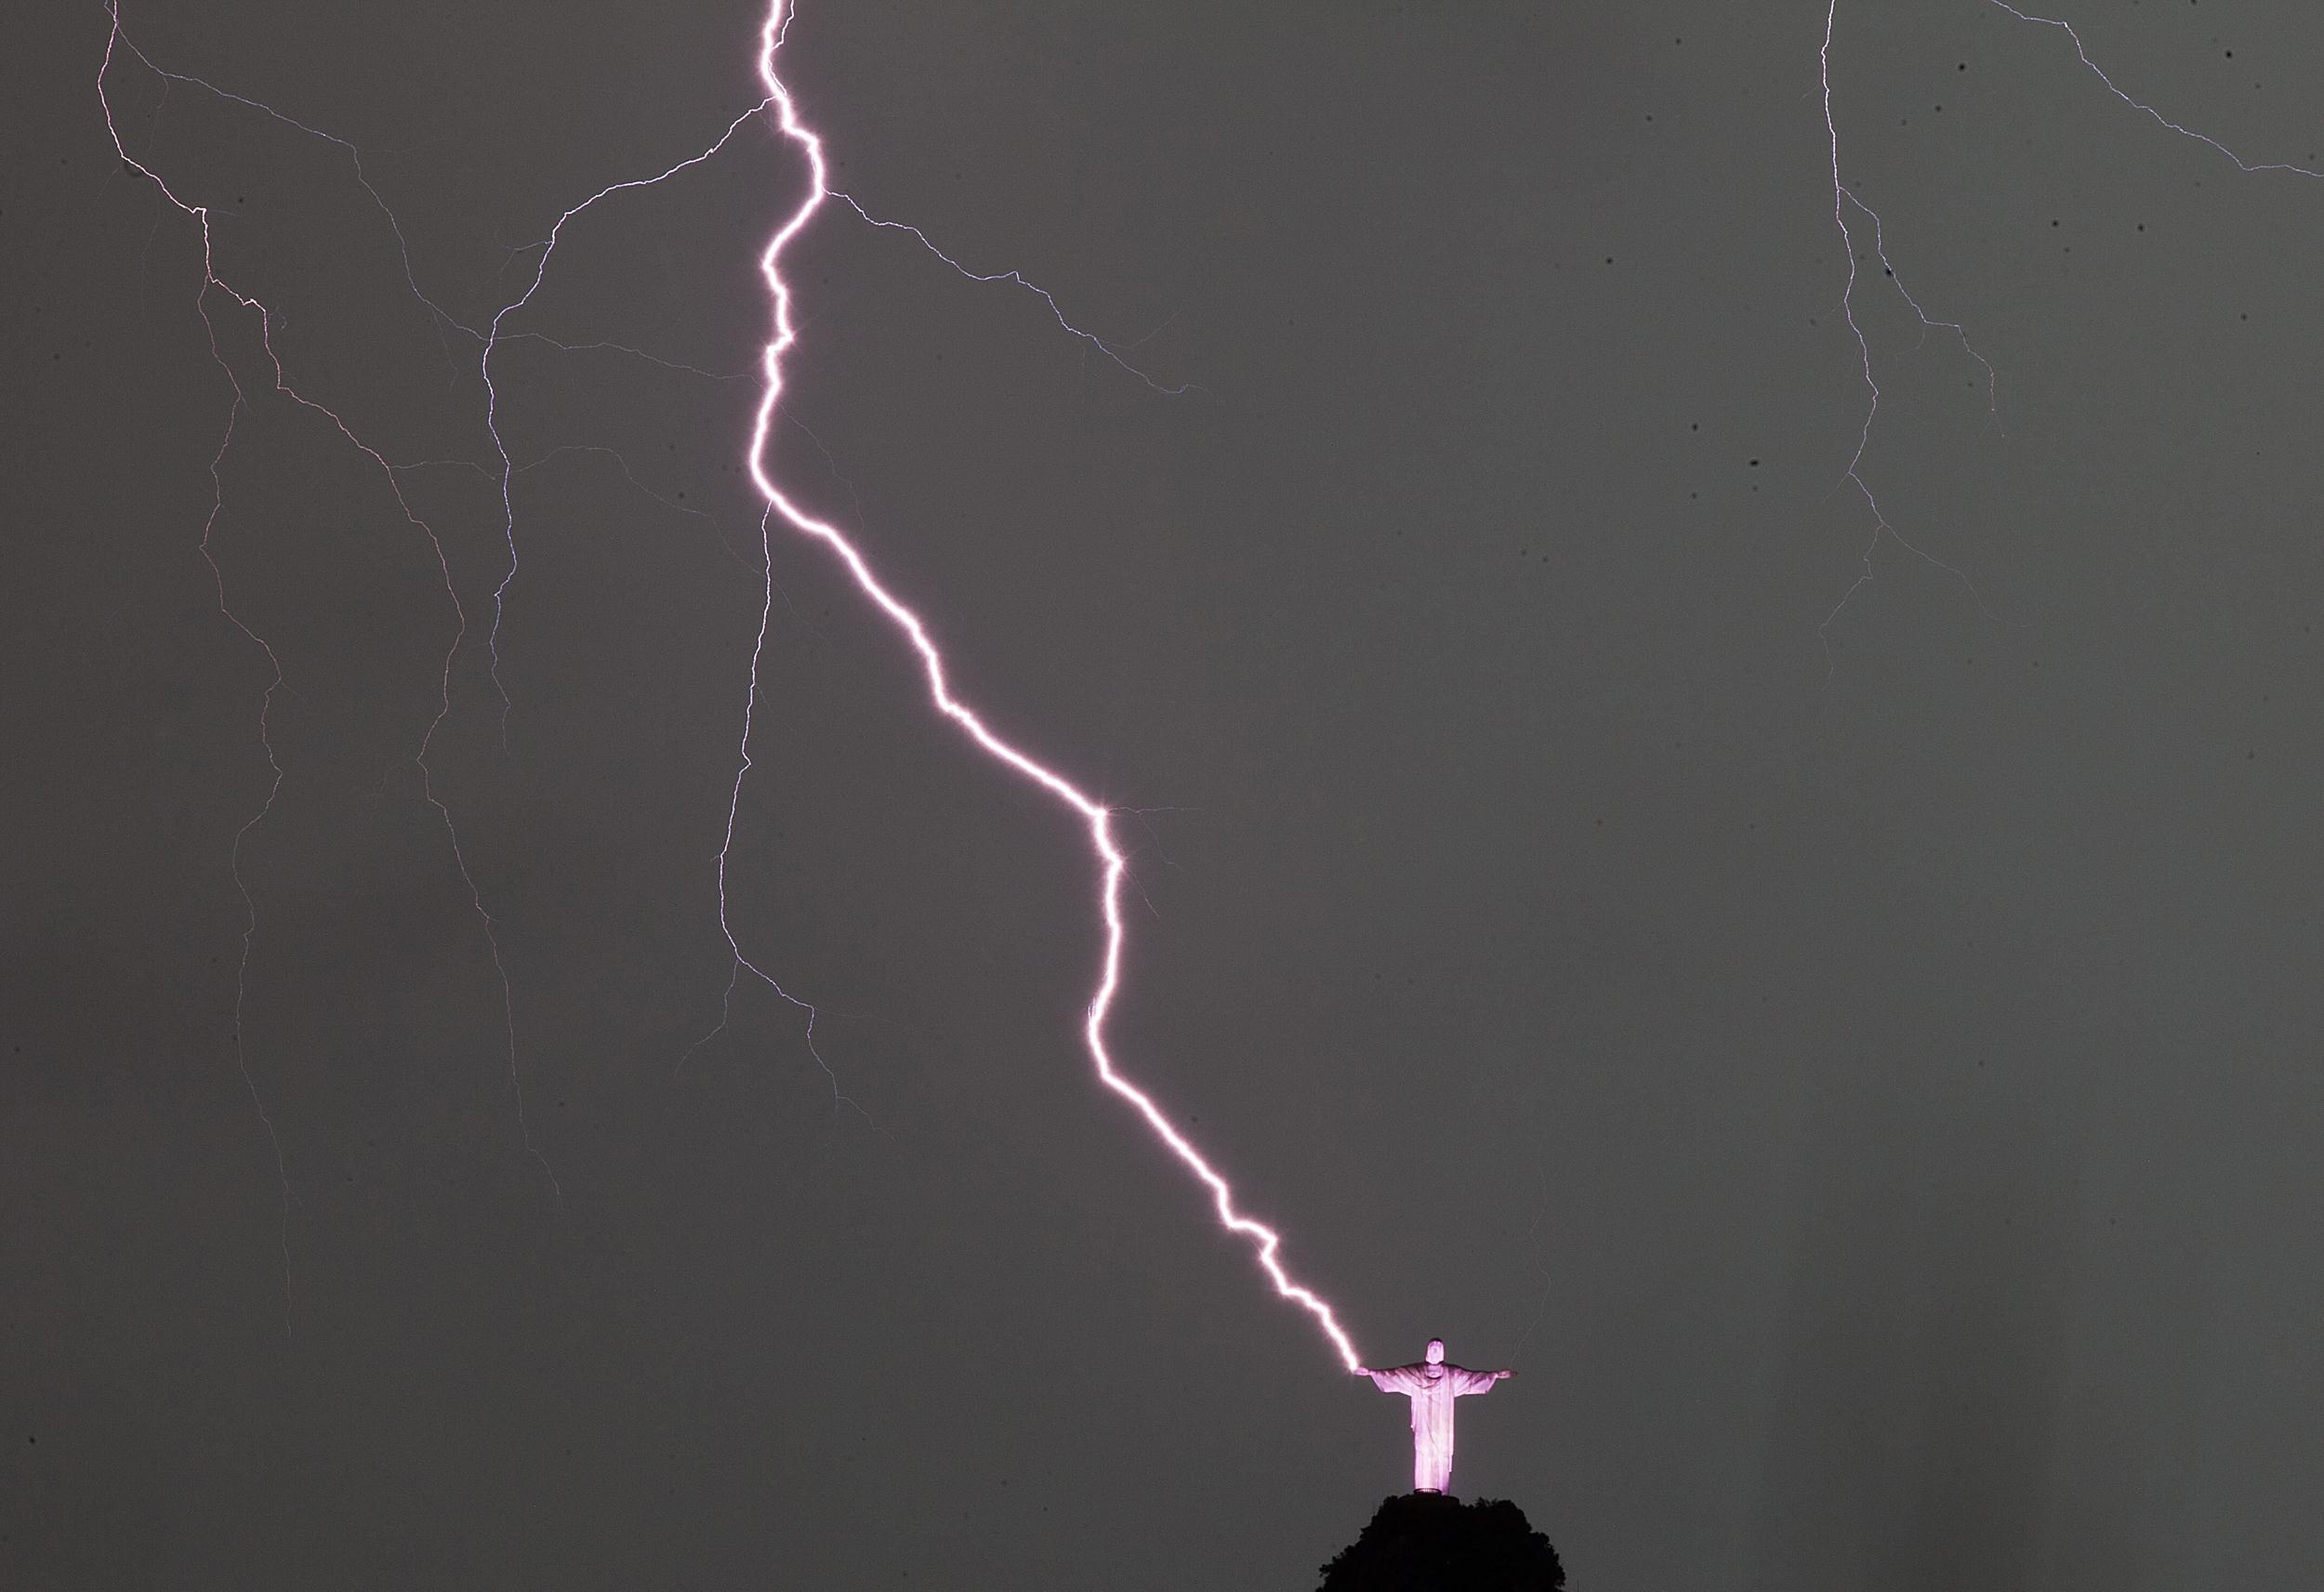 Lightning struck Christ the Redeemer statue in Brazil